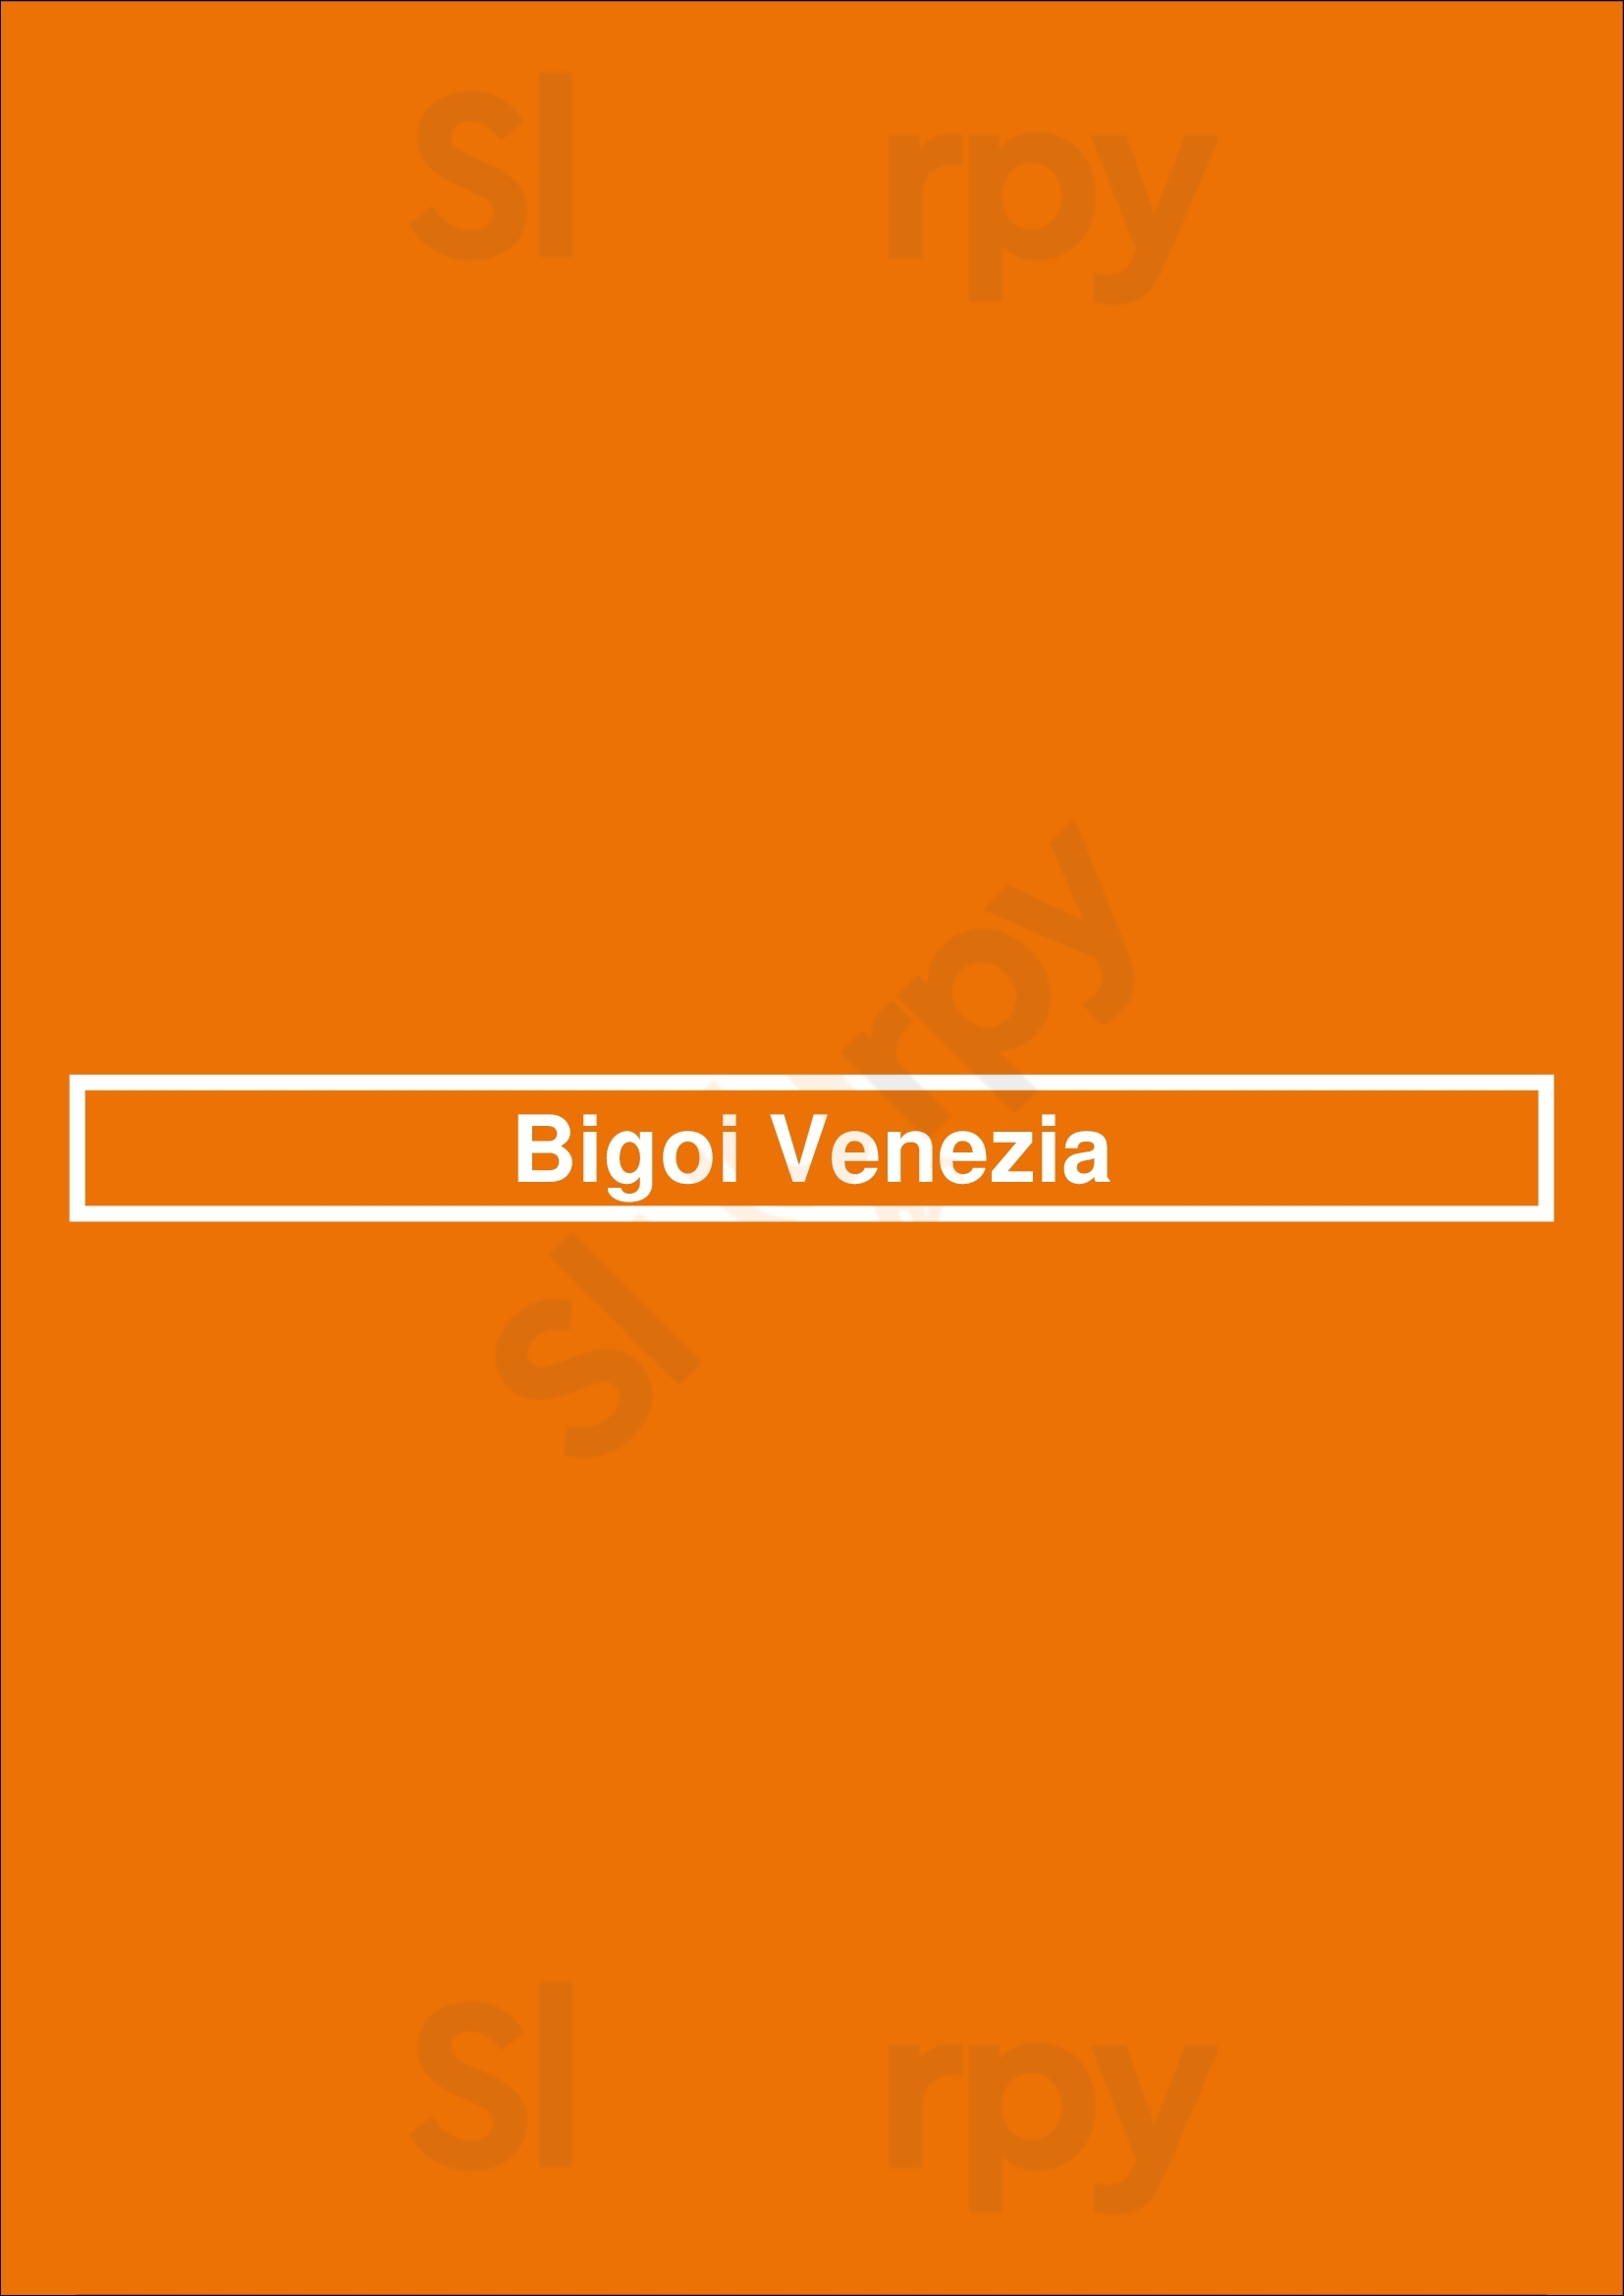 Bigoi Venezia New York City Menu - 1